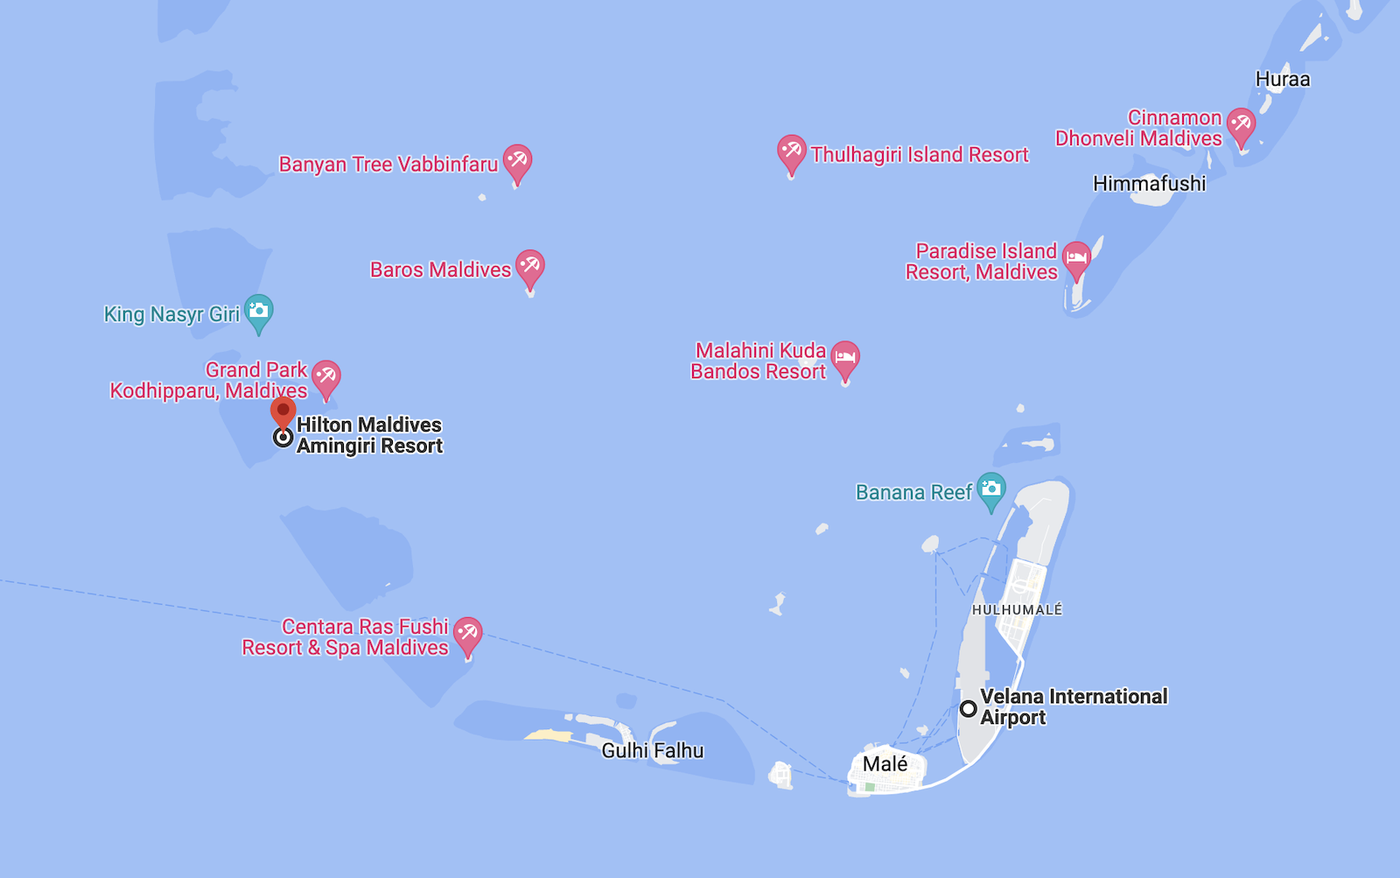 Hilton Maldives Amingiri Resort Google Maps